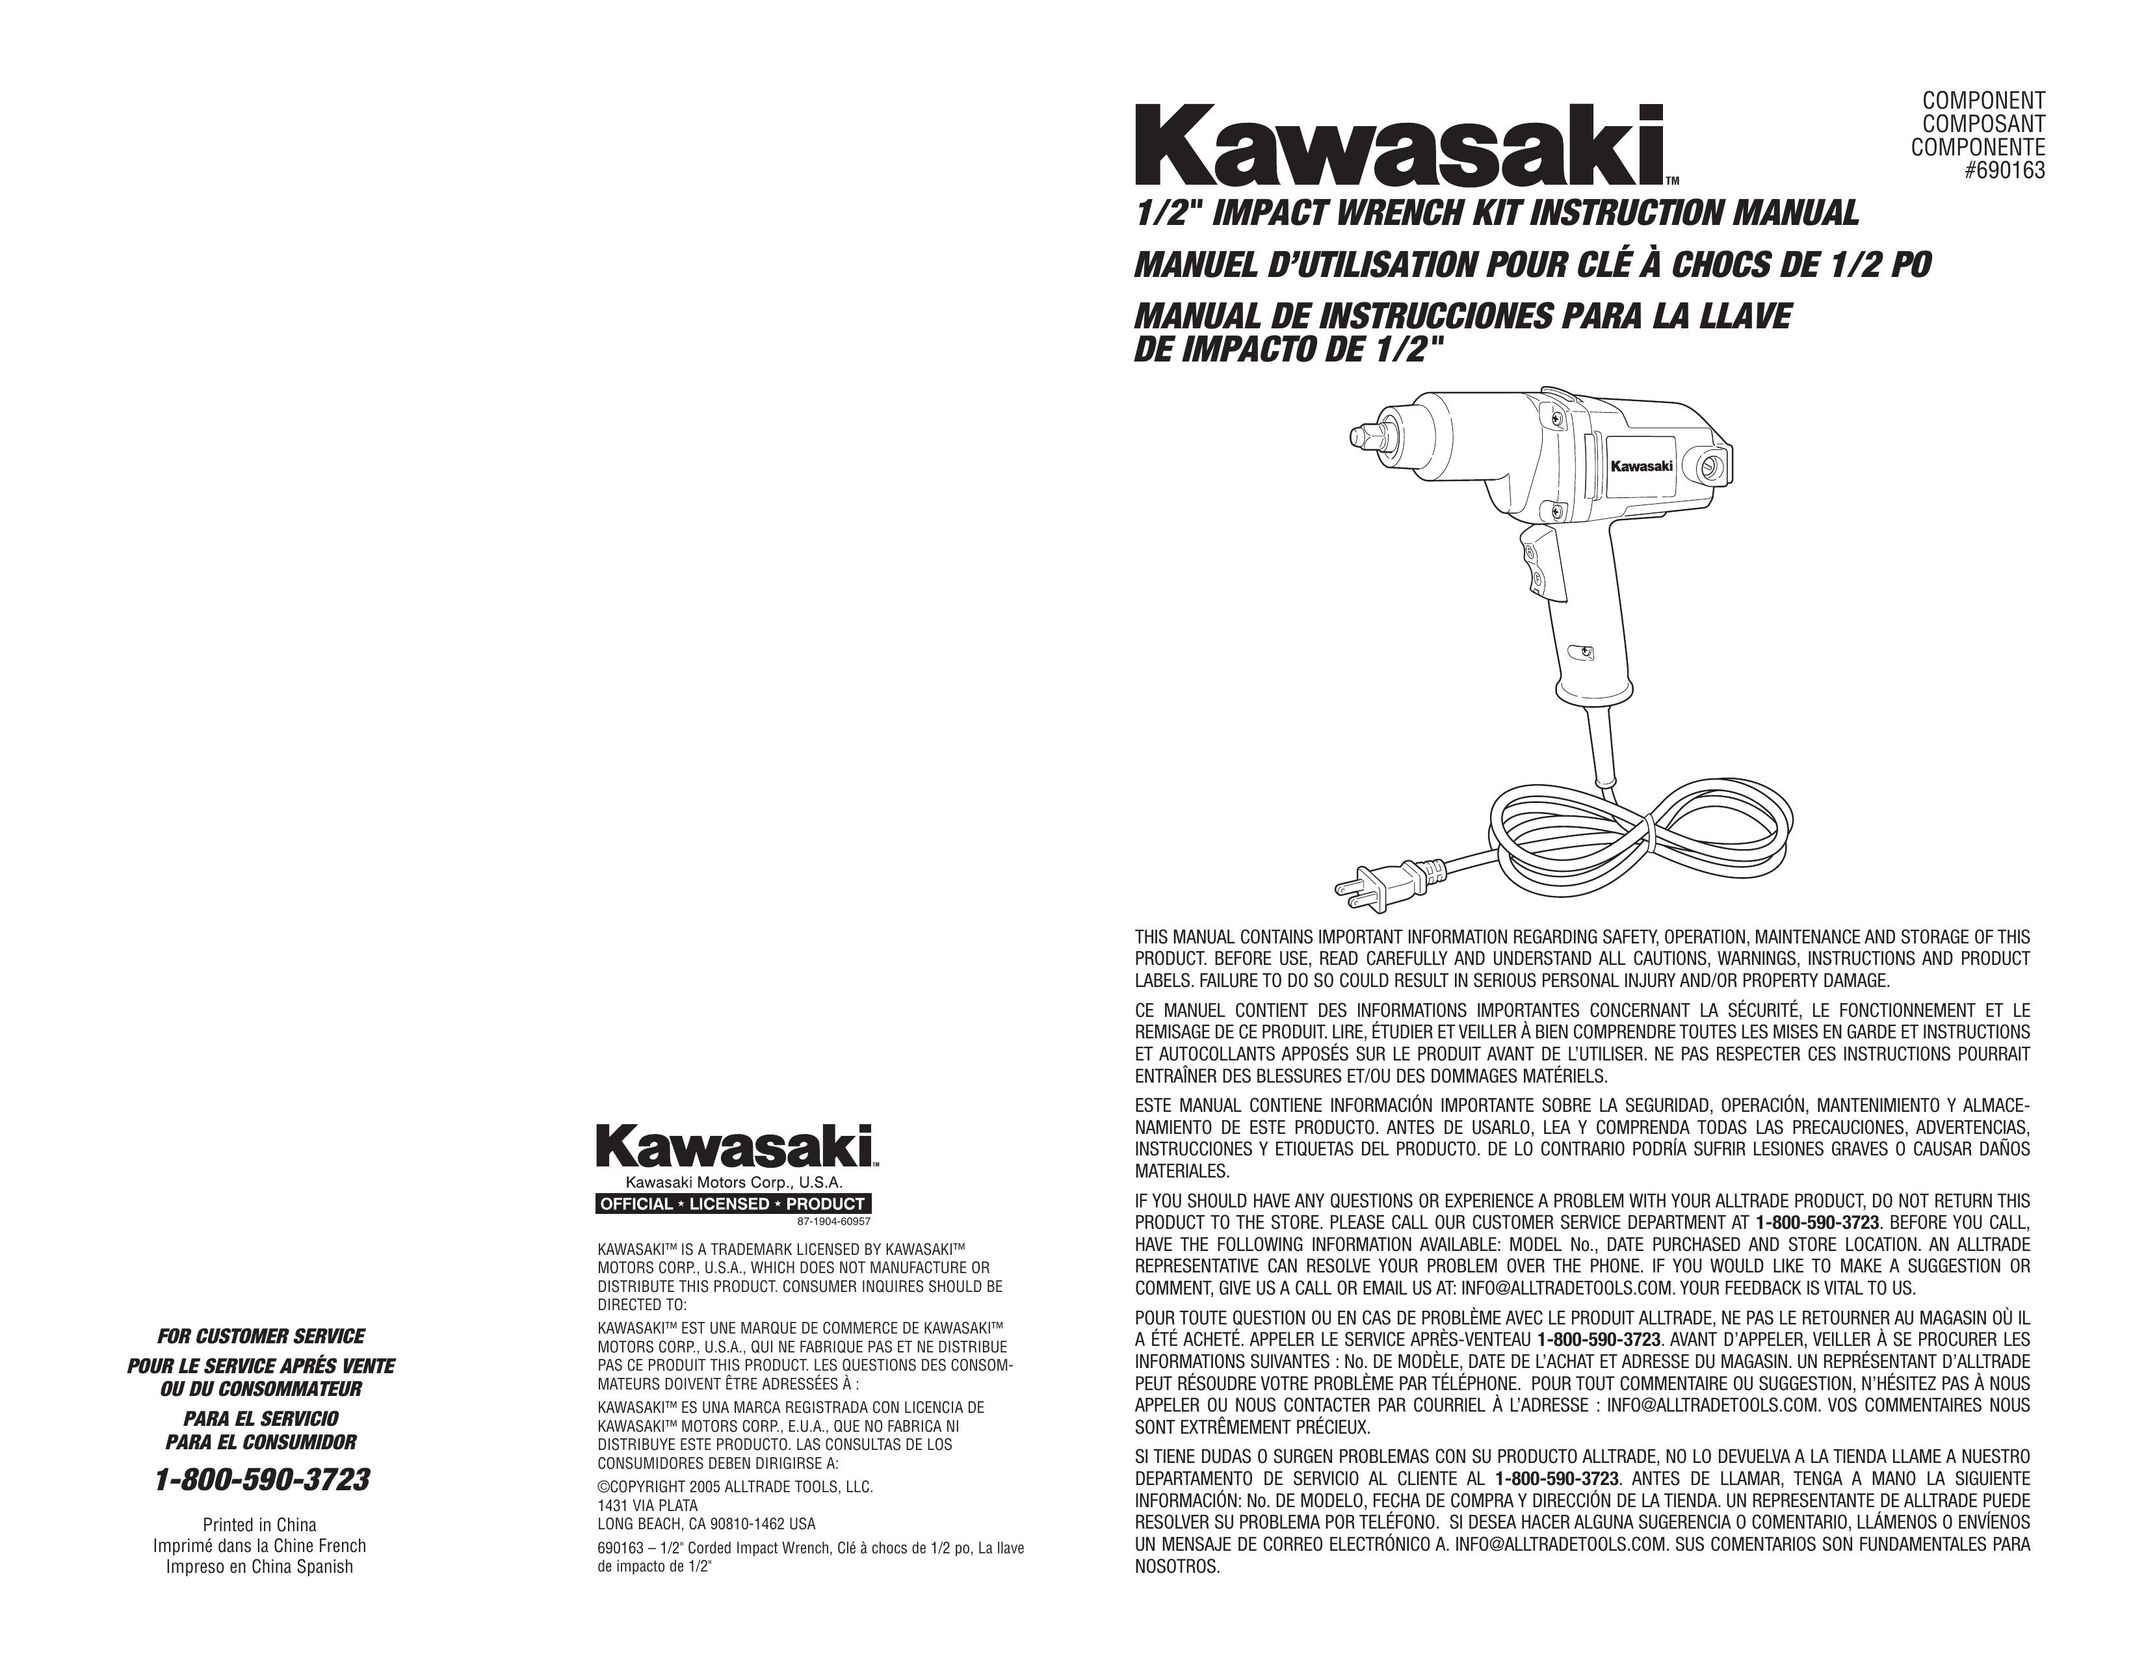 Kawasaki 690163 Impact Driver User Manual